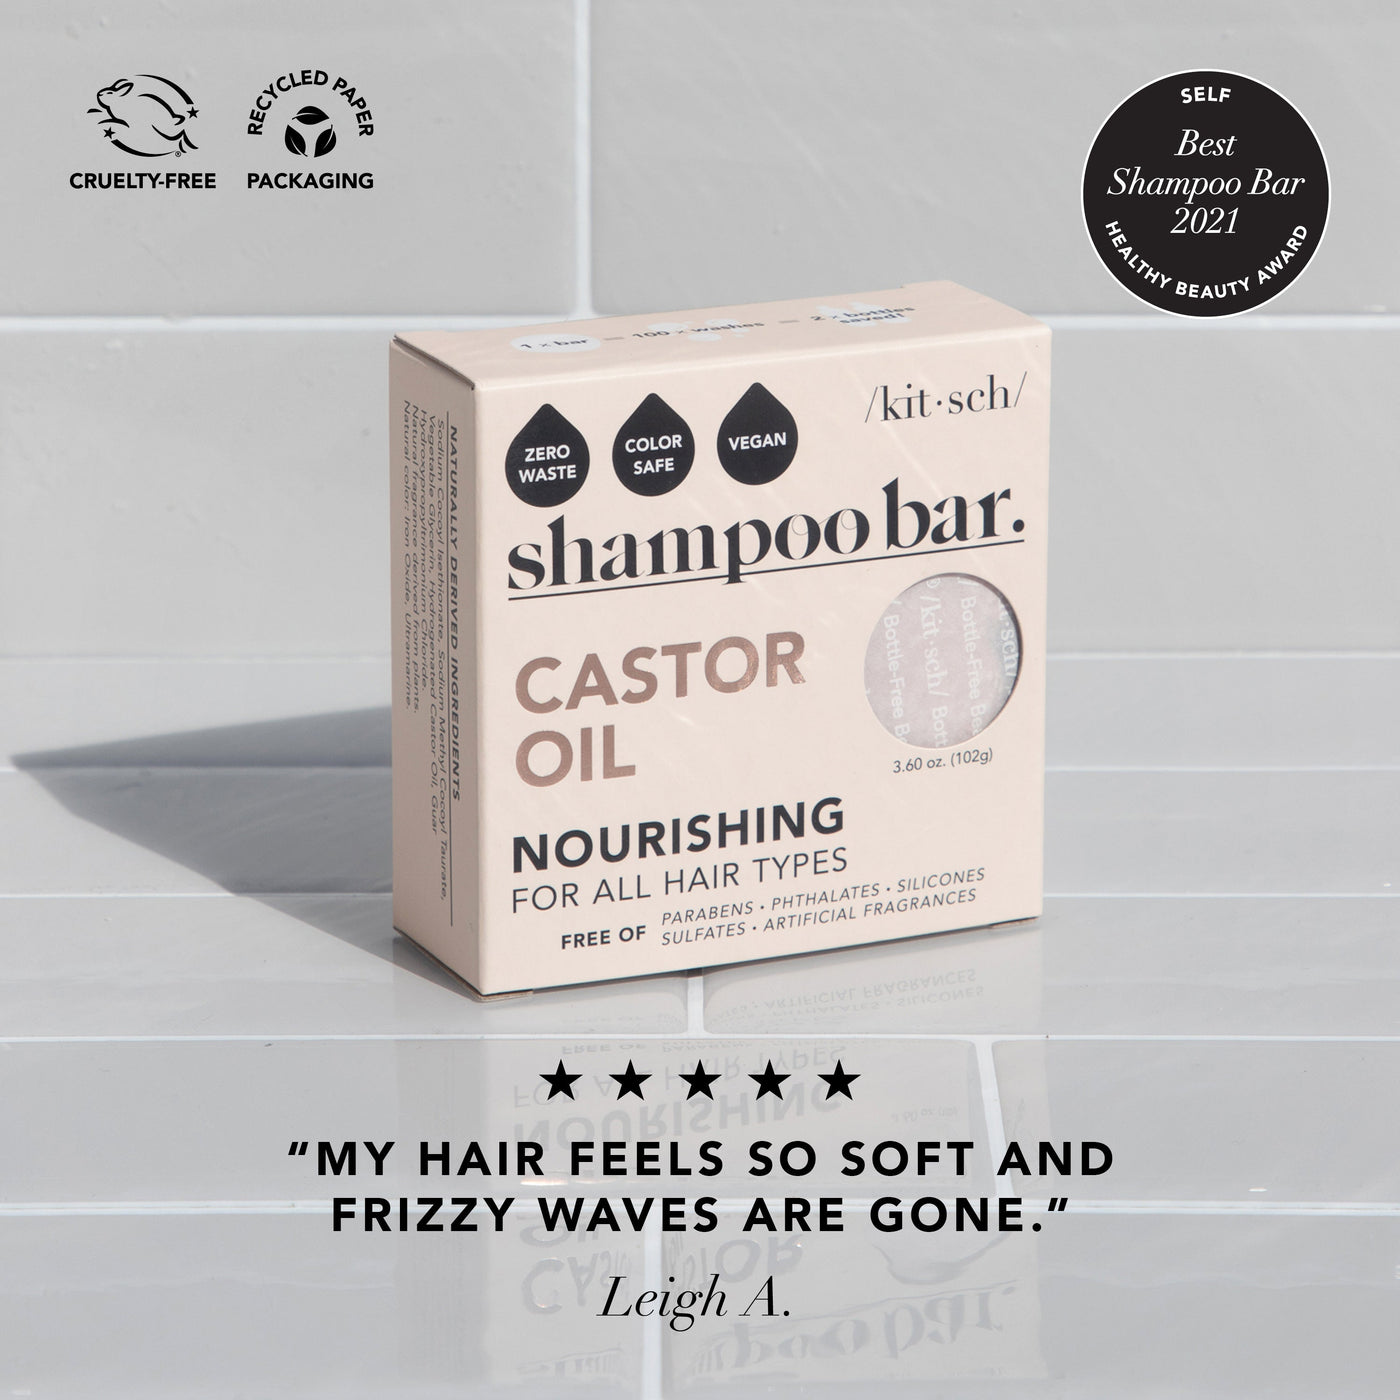 Castor Oil Nourishing Shampoo Bar by KITSCH